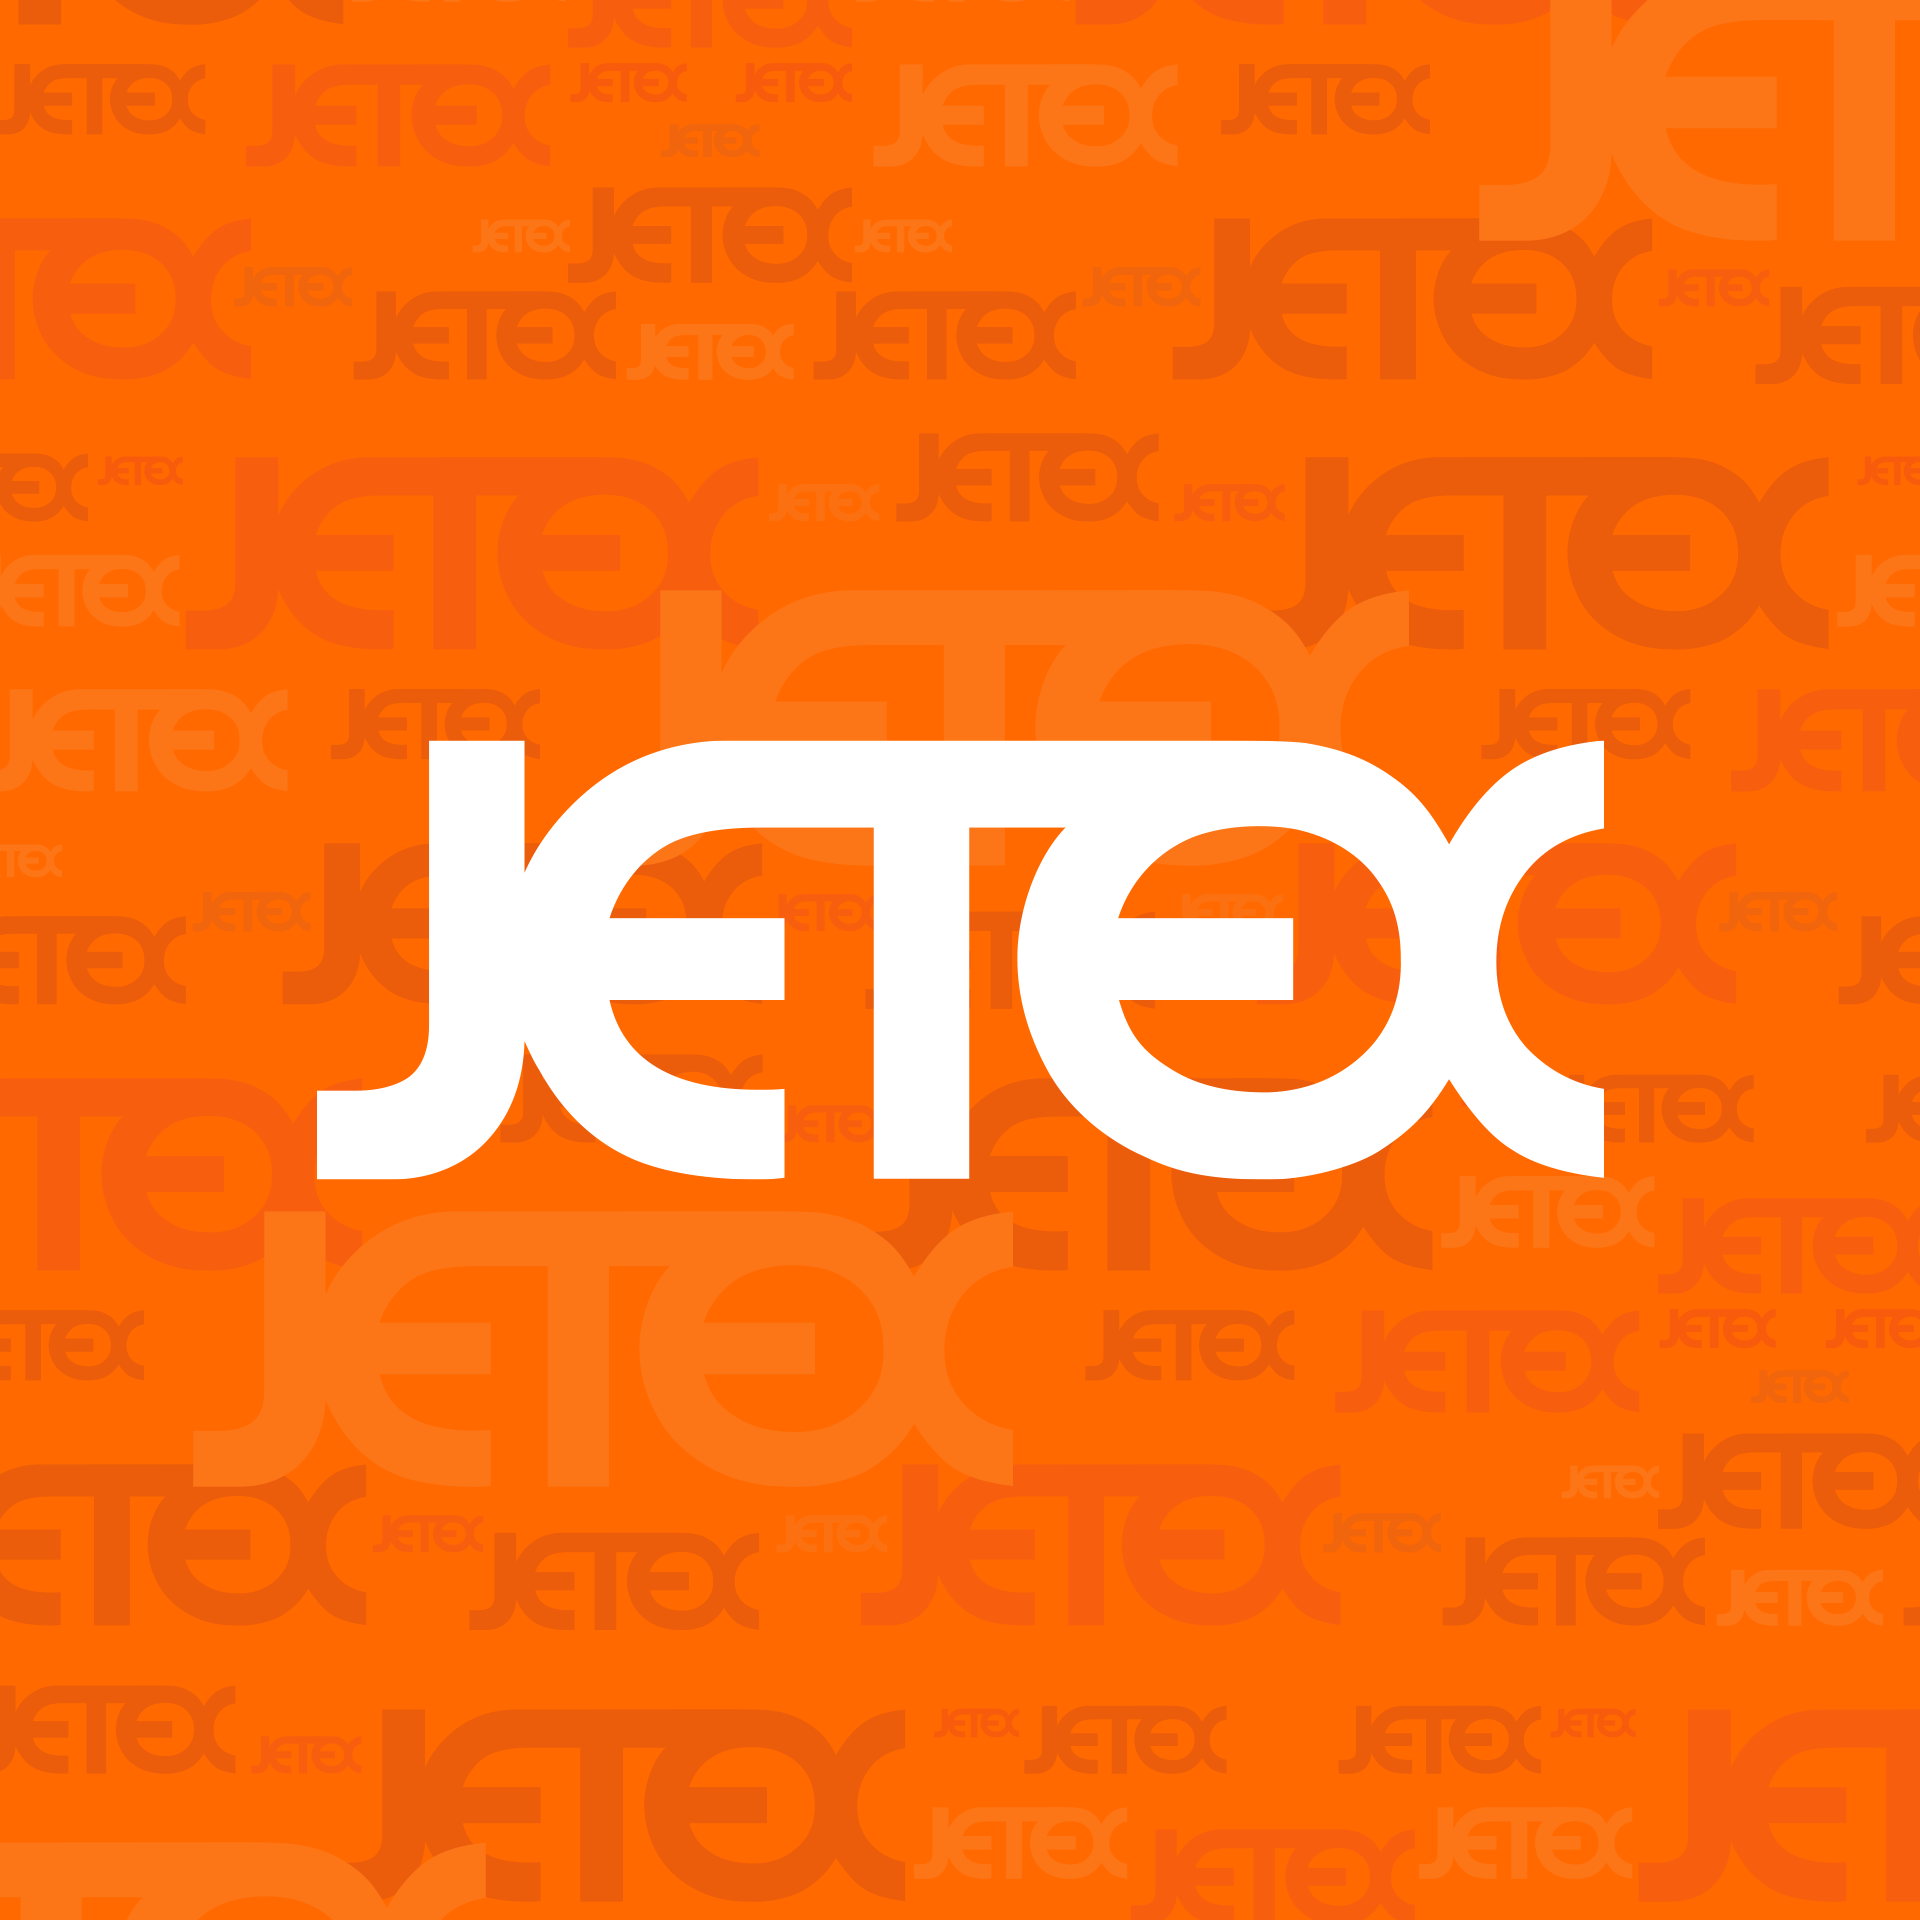 Jetex London - London, London TN16 3BN - 01959 528743 | ShowMeLocal.com